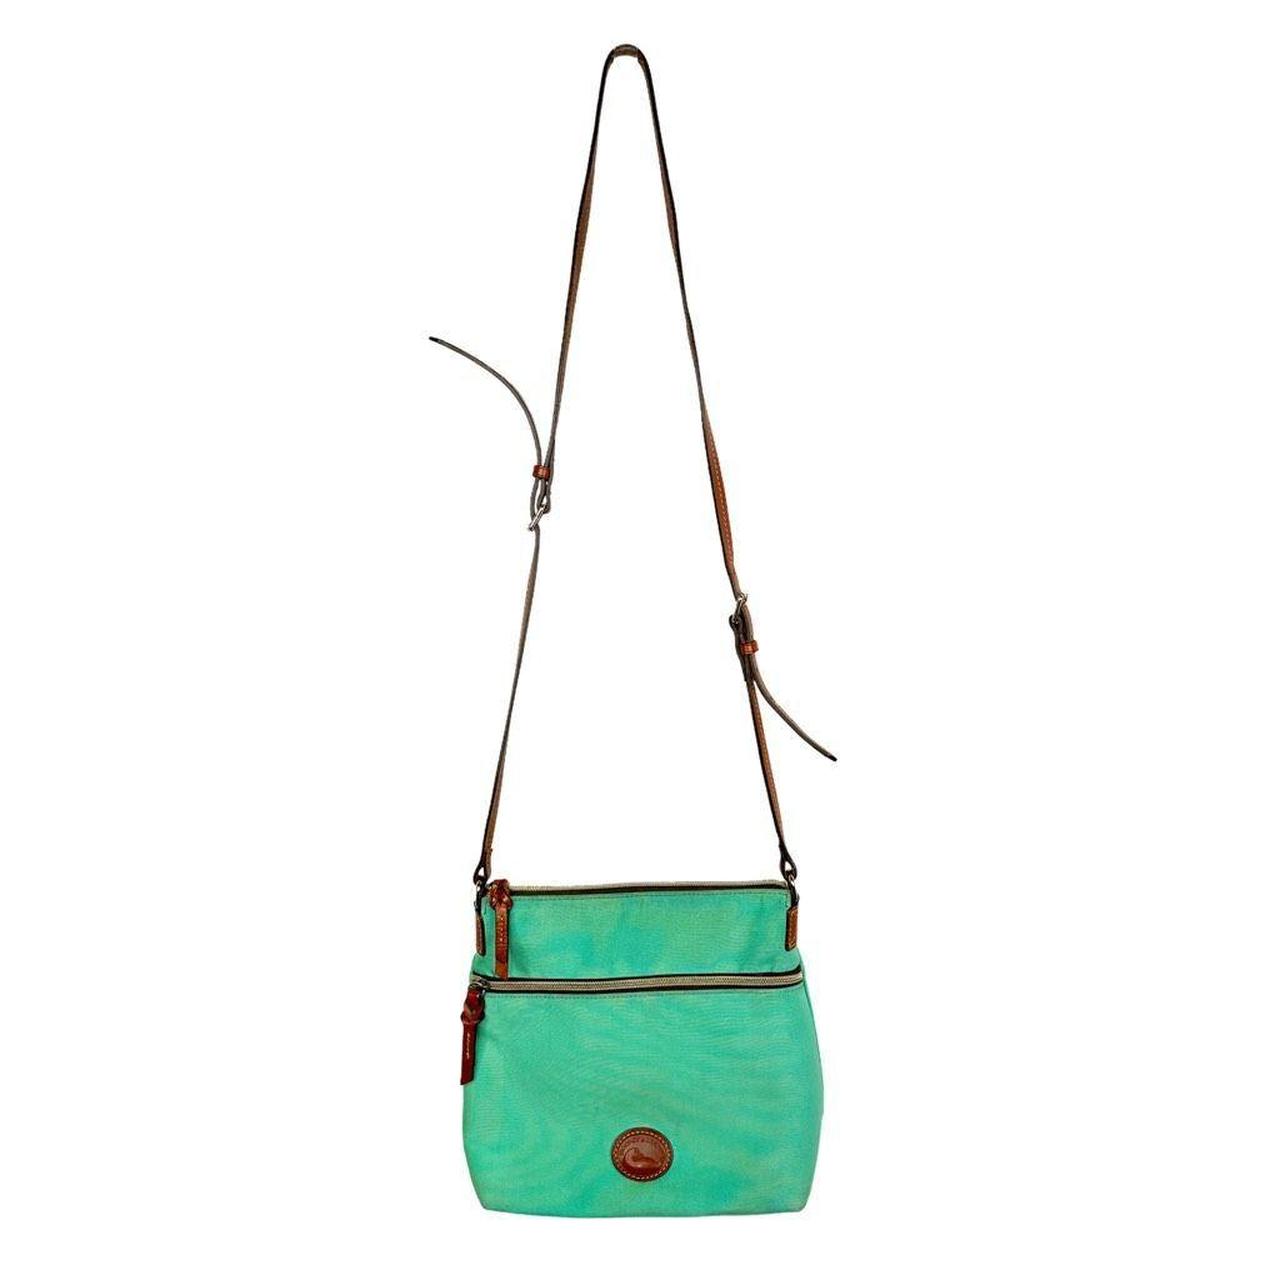 Dooney & Bourke Handbag, Nylon Shopper Tote - Mint